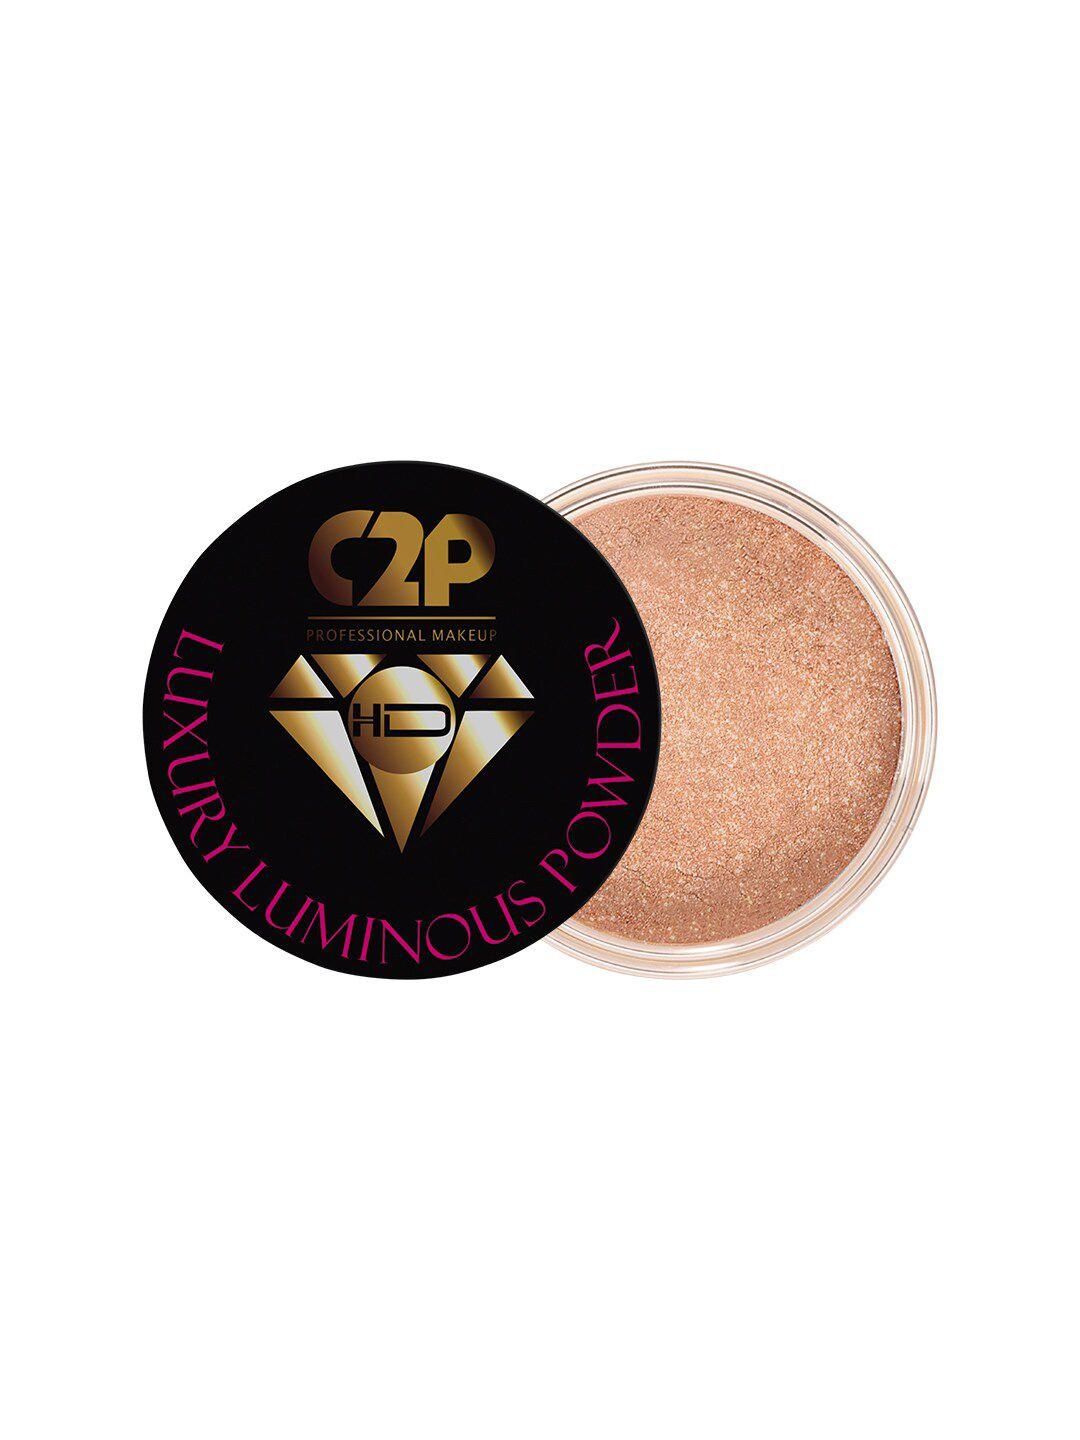 c2p professional makeup hd luxury luminous shimmer powder - natural 01